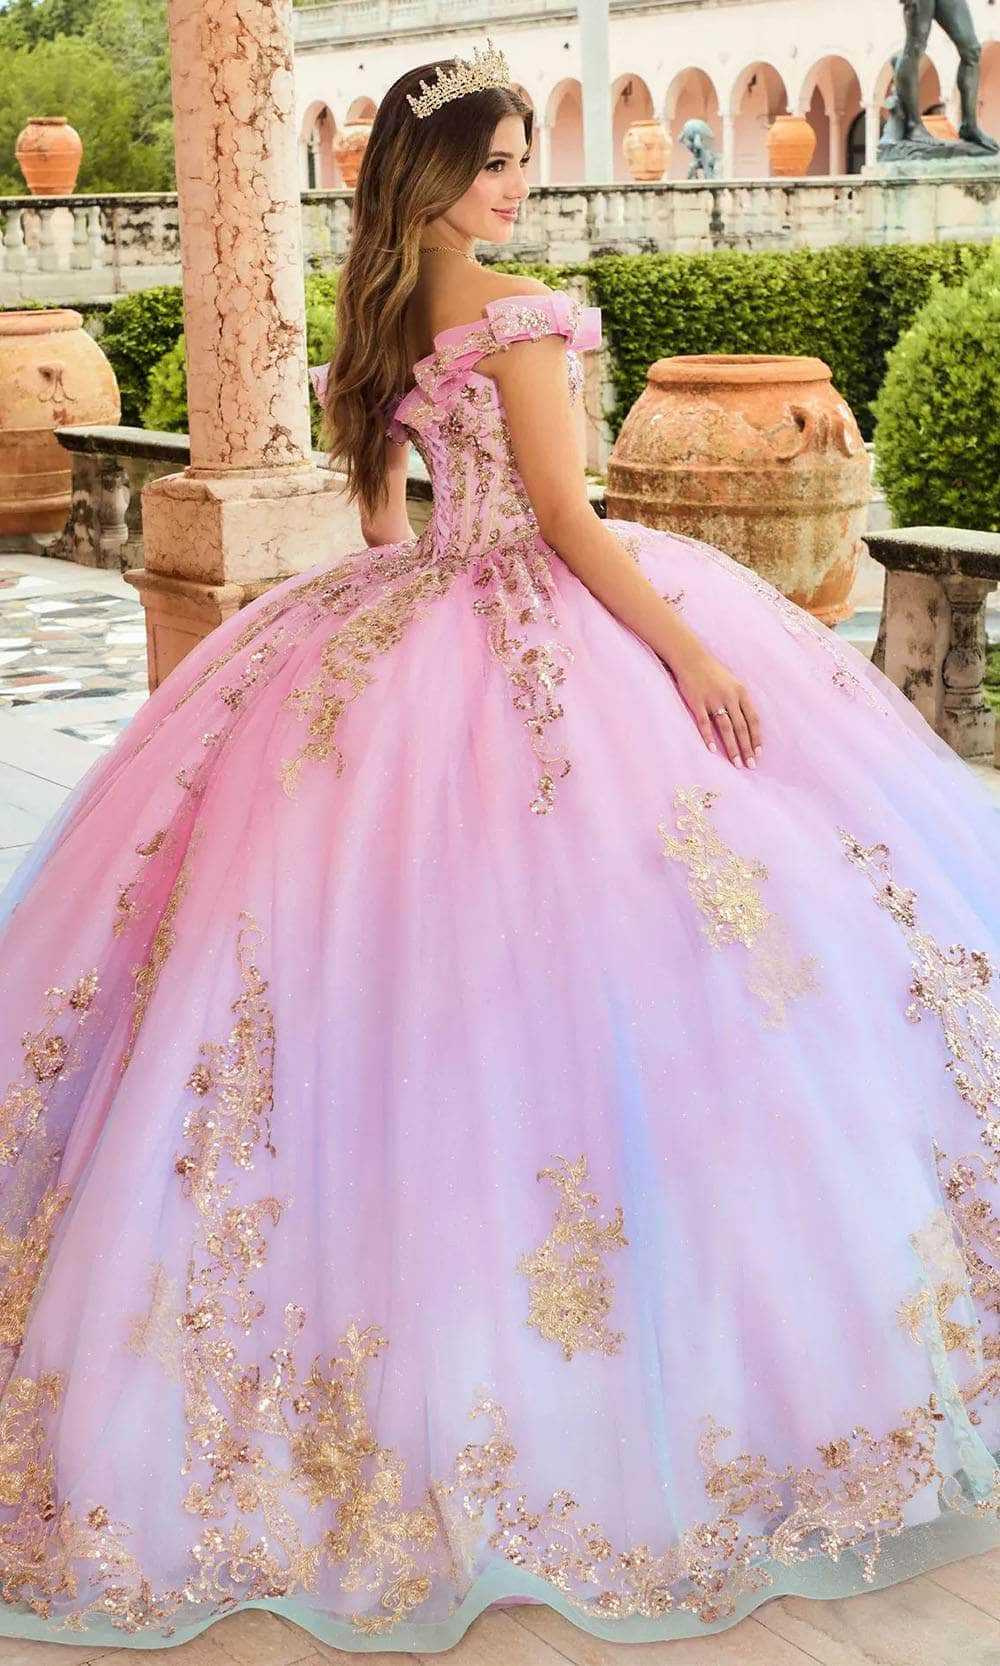 Princesa by Ariana Vara, Princesa by Ariana Vara PR30152 - 3D Floral Lace-Up Tie Prom Gown